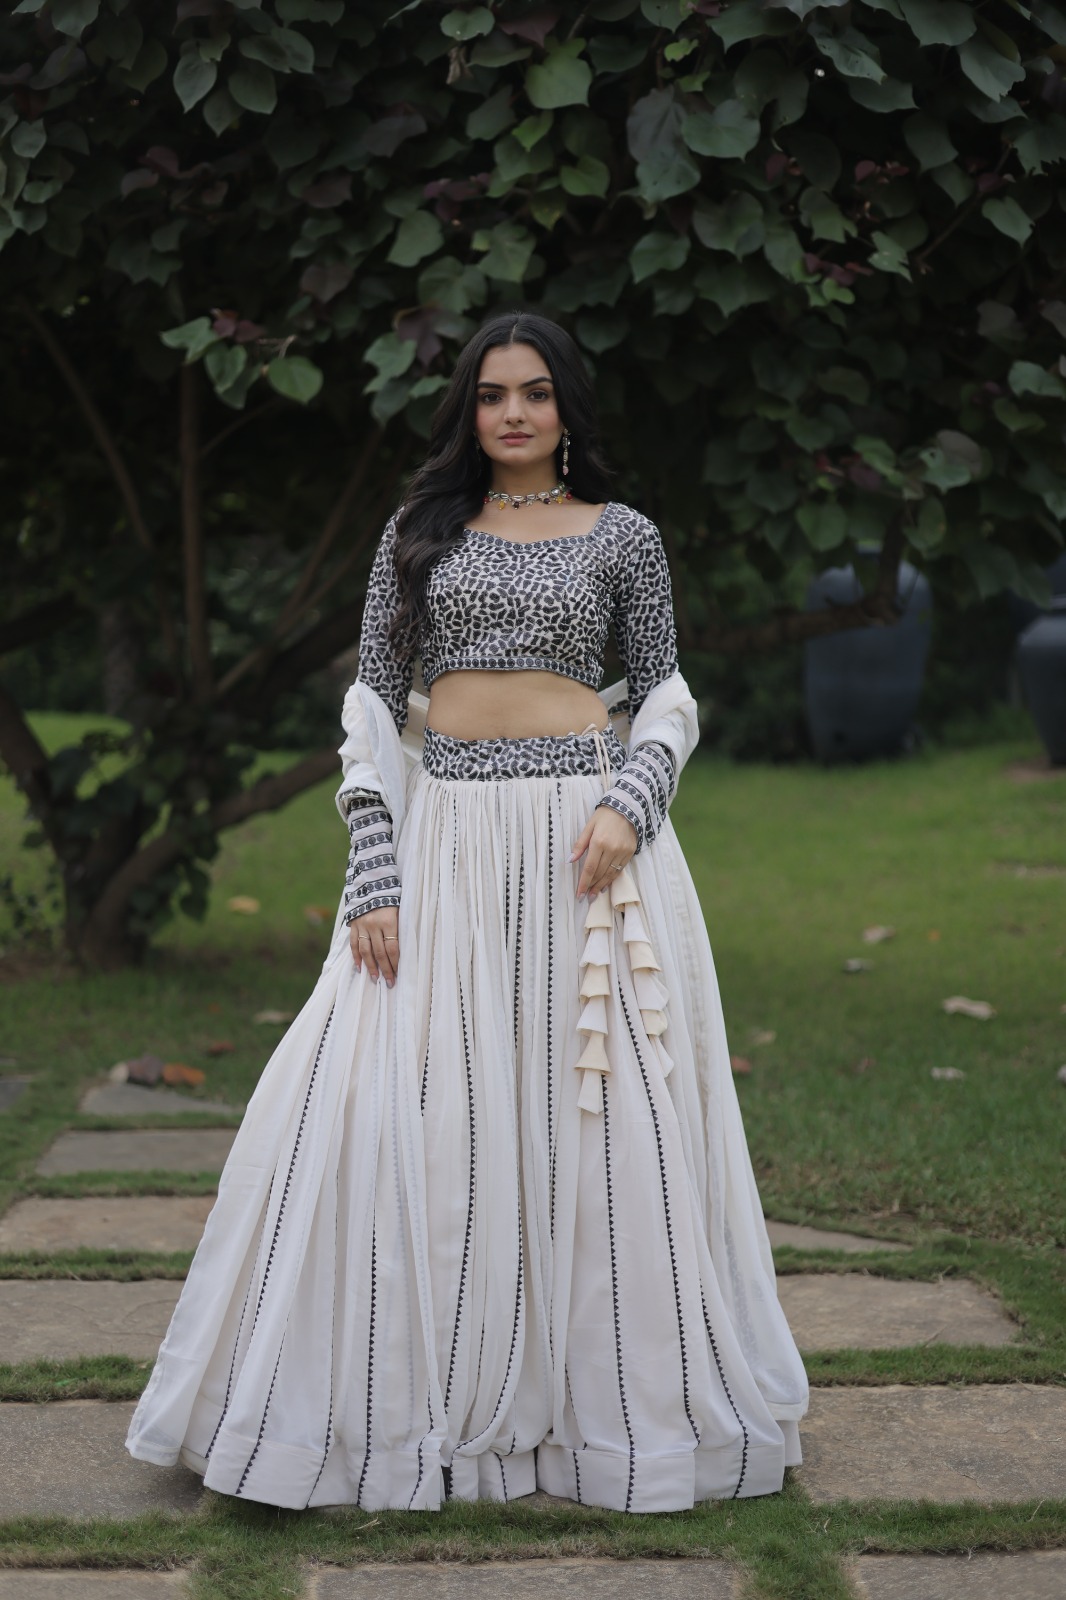 New Salwar Kameez Suit Indian Pakistani Ethnic Designer Party Wear lehenga  Dress | eBay